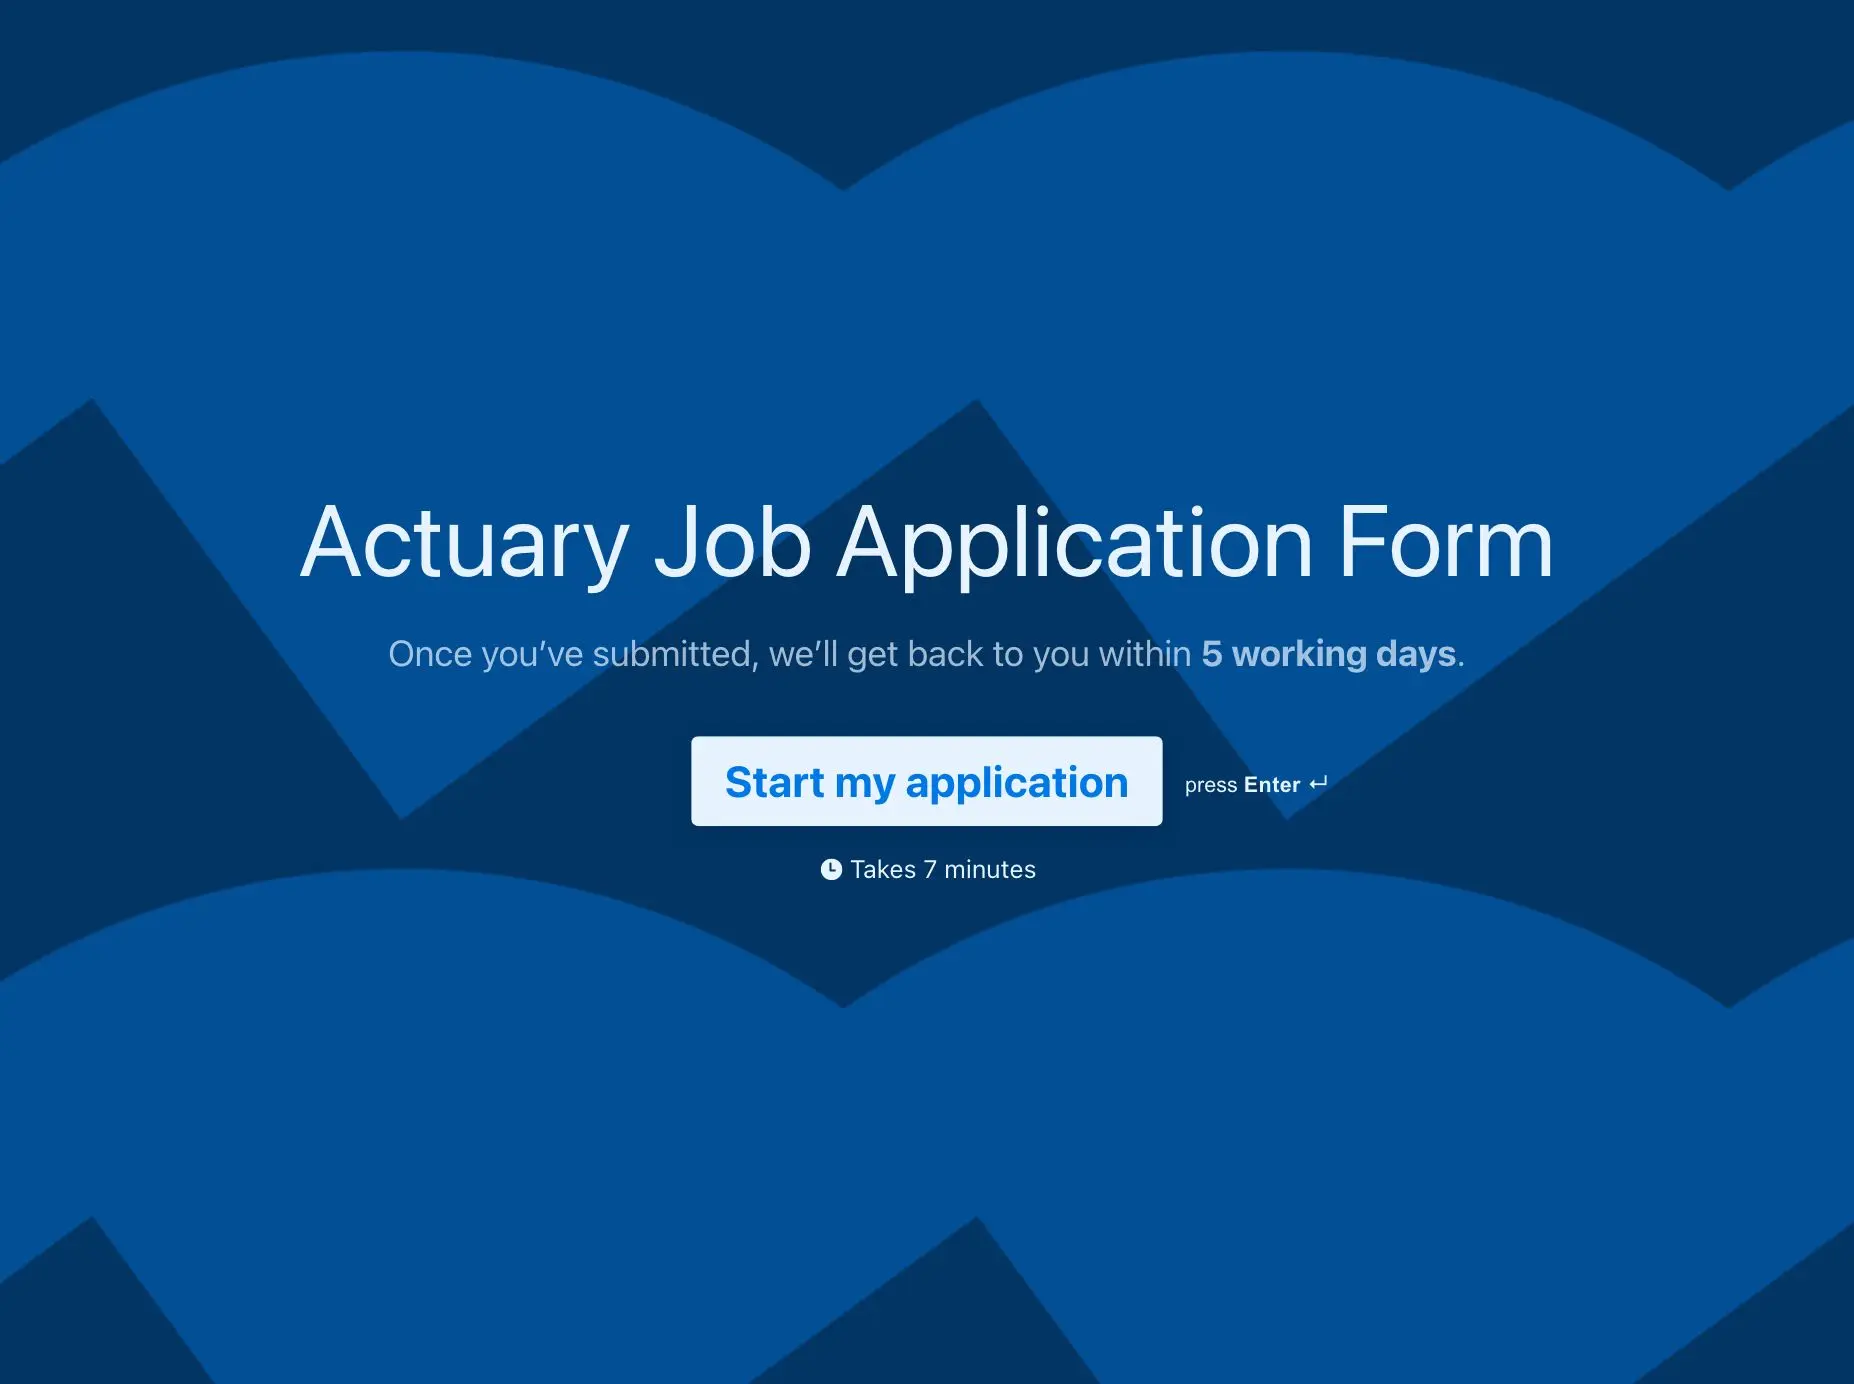 Actuary Job Application Form Template Hero